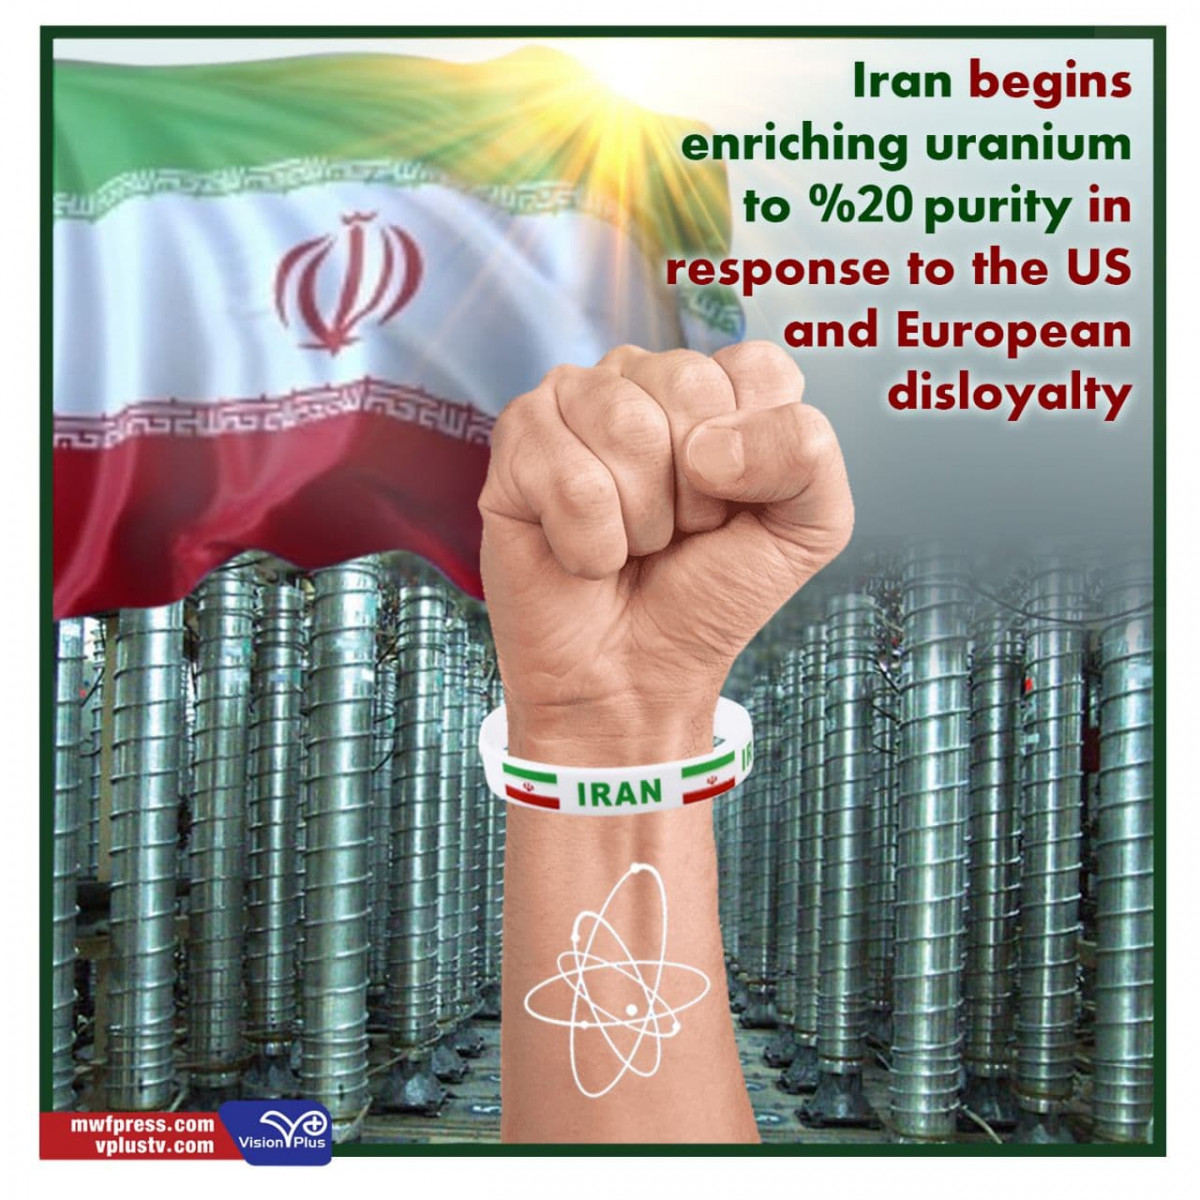 Iran begins enriching uranium to 20% purity in response to the US and European disloyalty